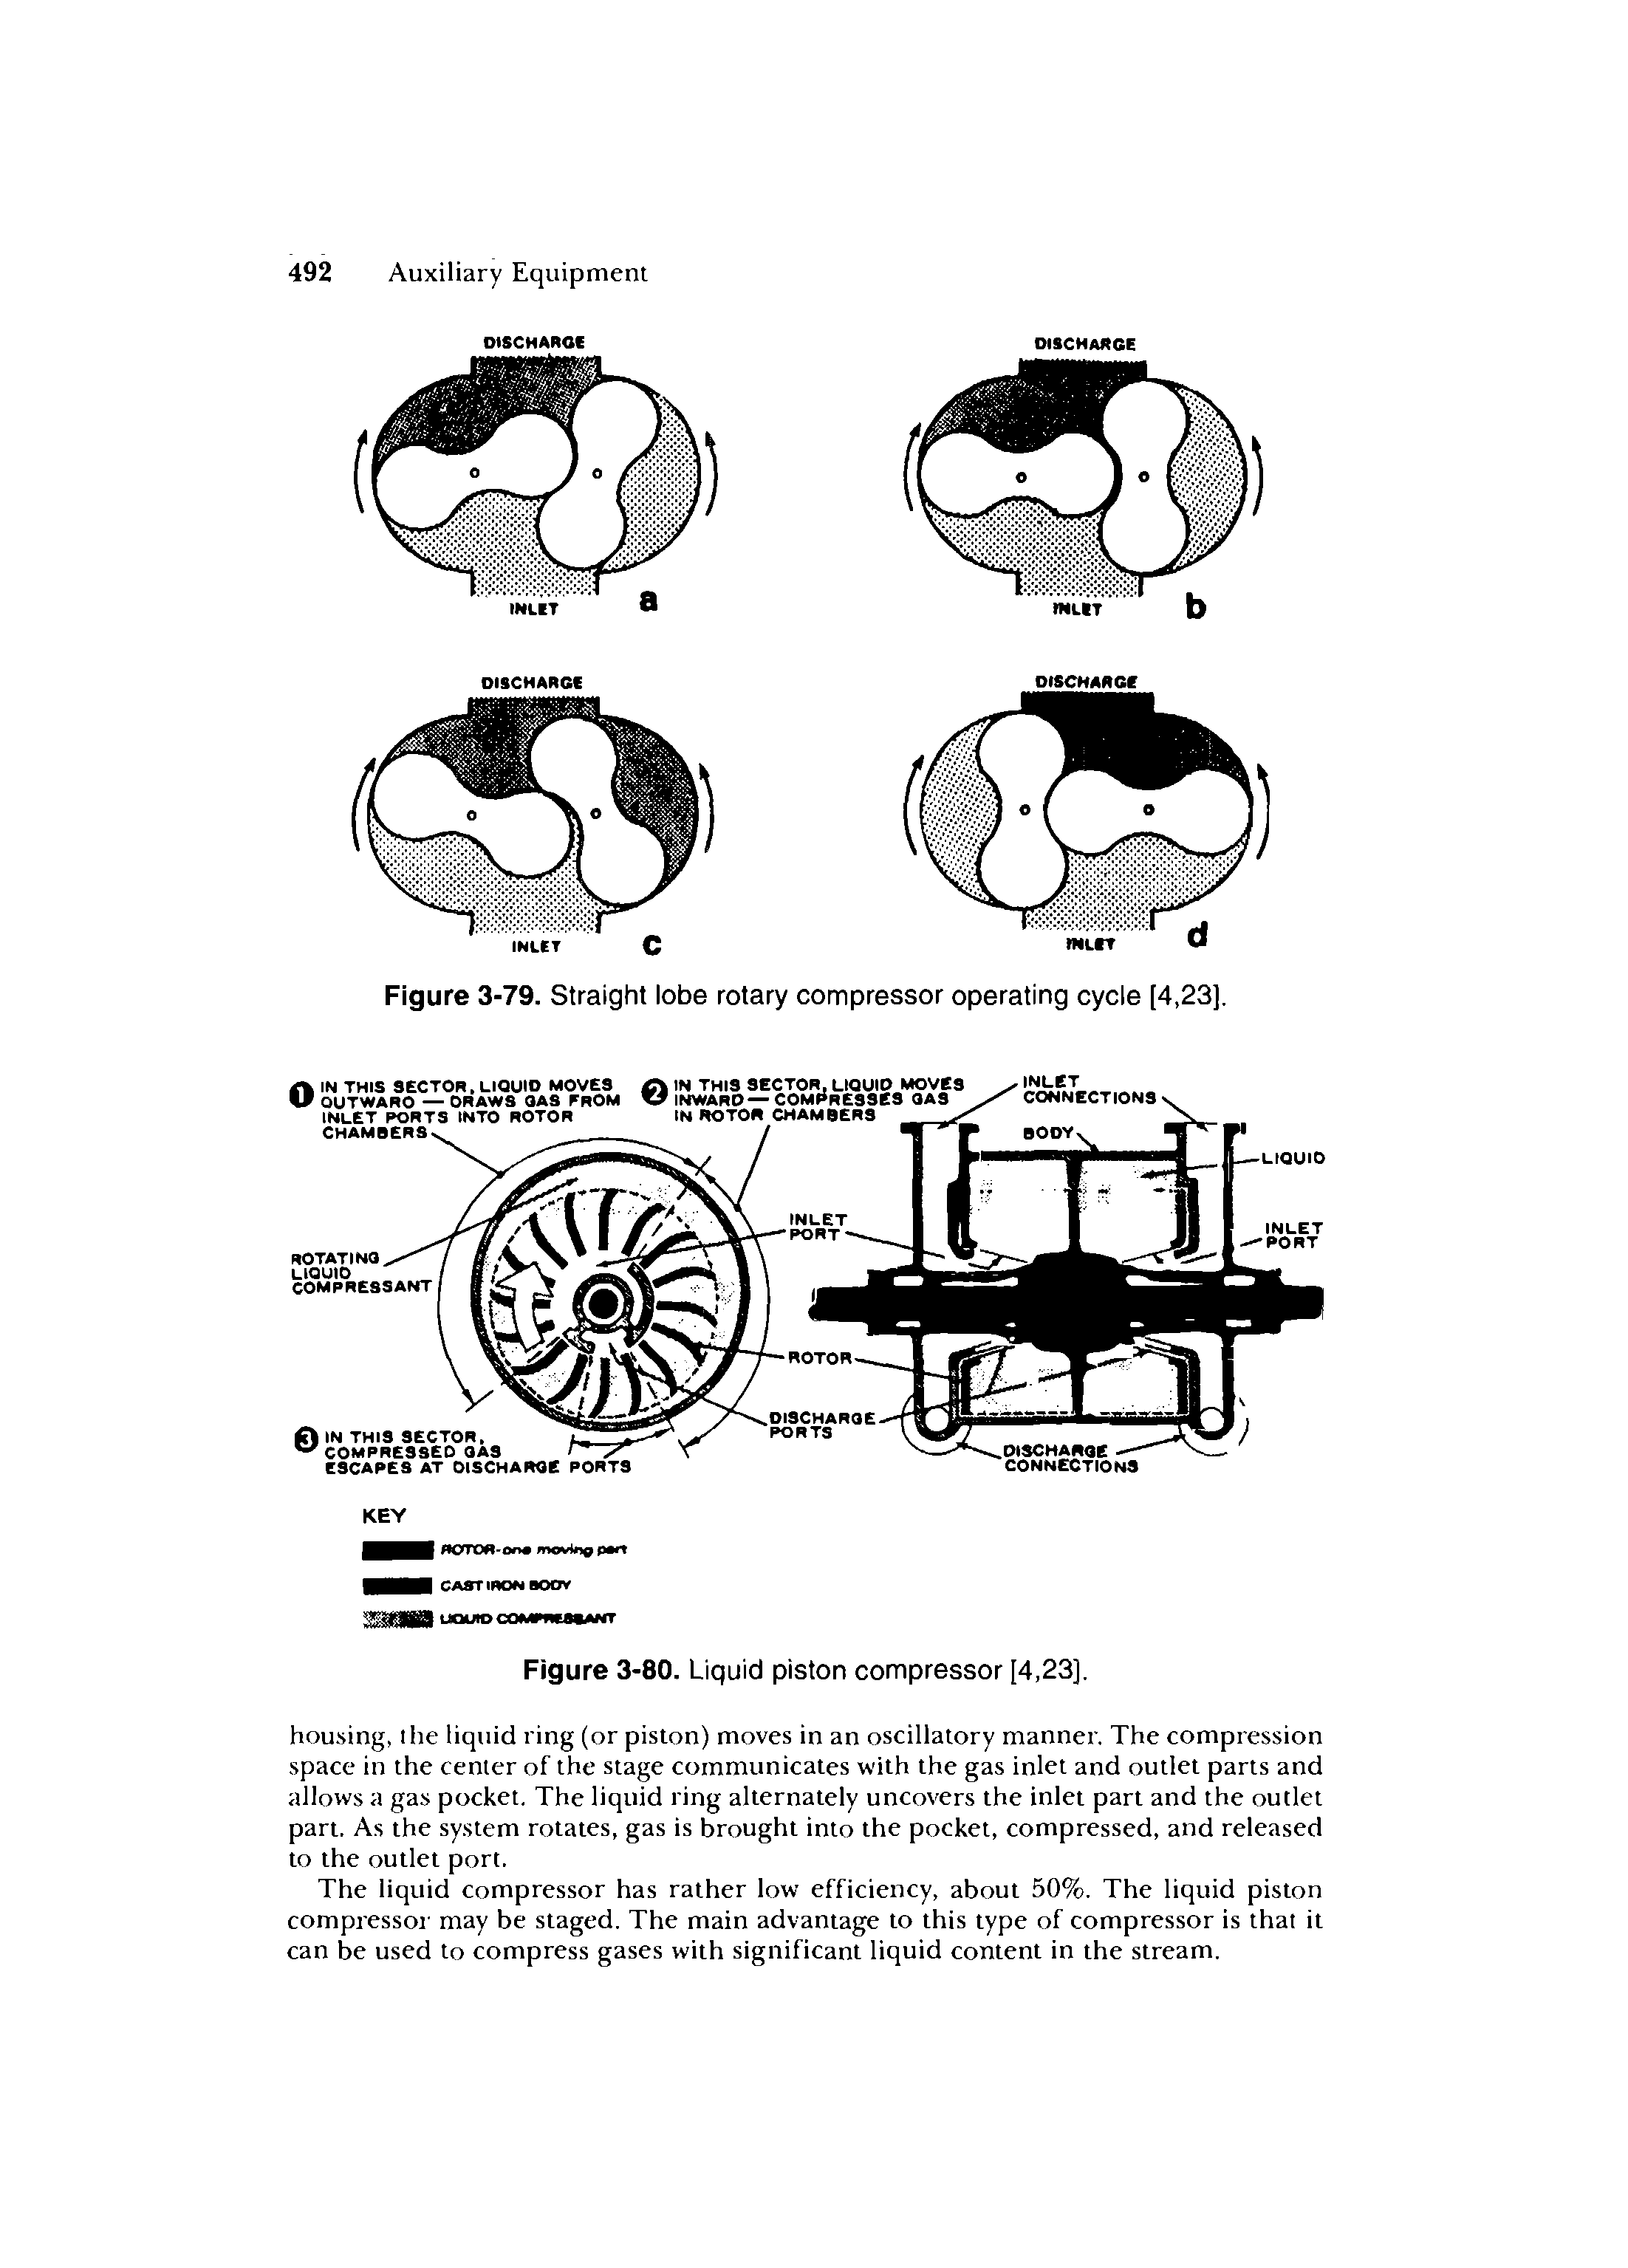 Figure 3-79. Straight lobe rotary compressor operating cycle [4,23].